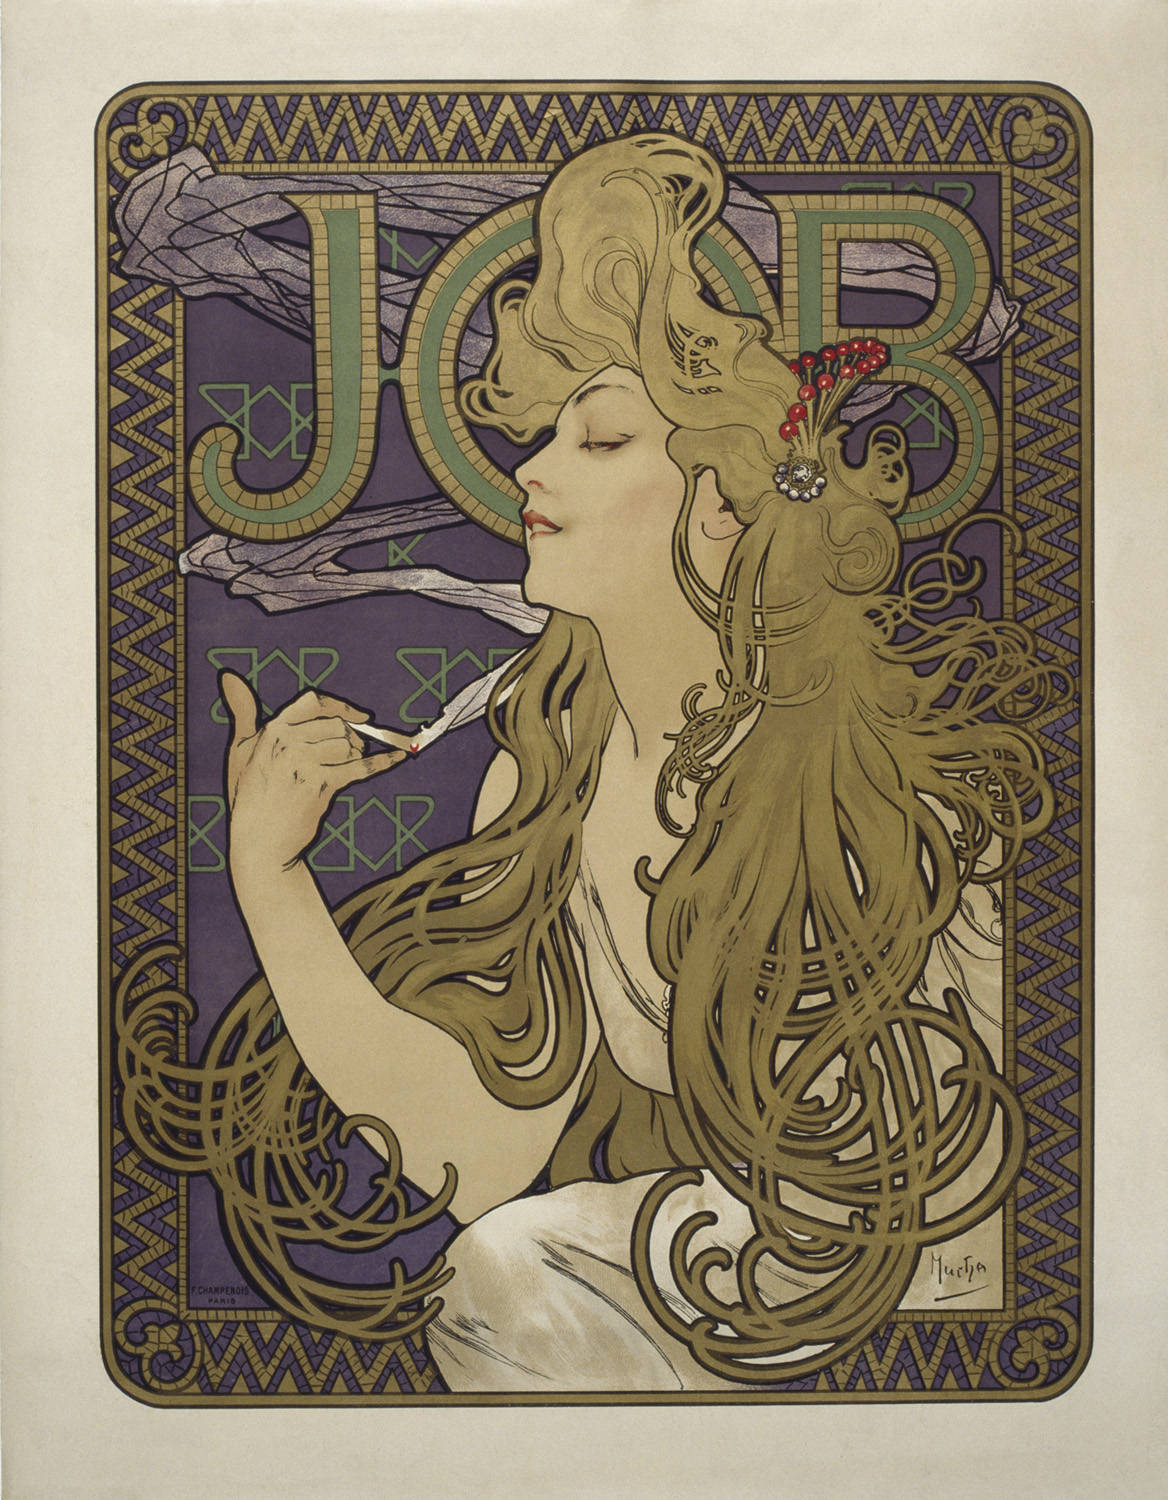 Job香烟广告 by 阿方斯 慕夏 - 1896 - 66.7 x 46.4 cm 